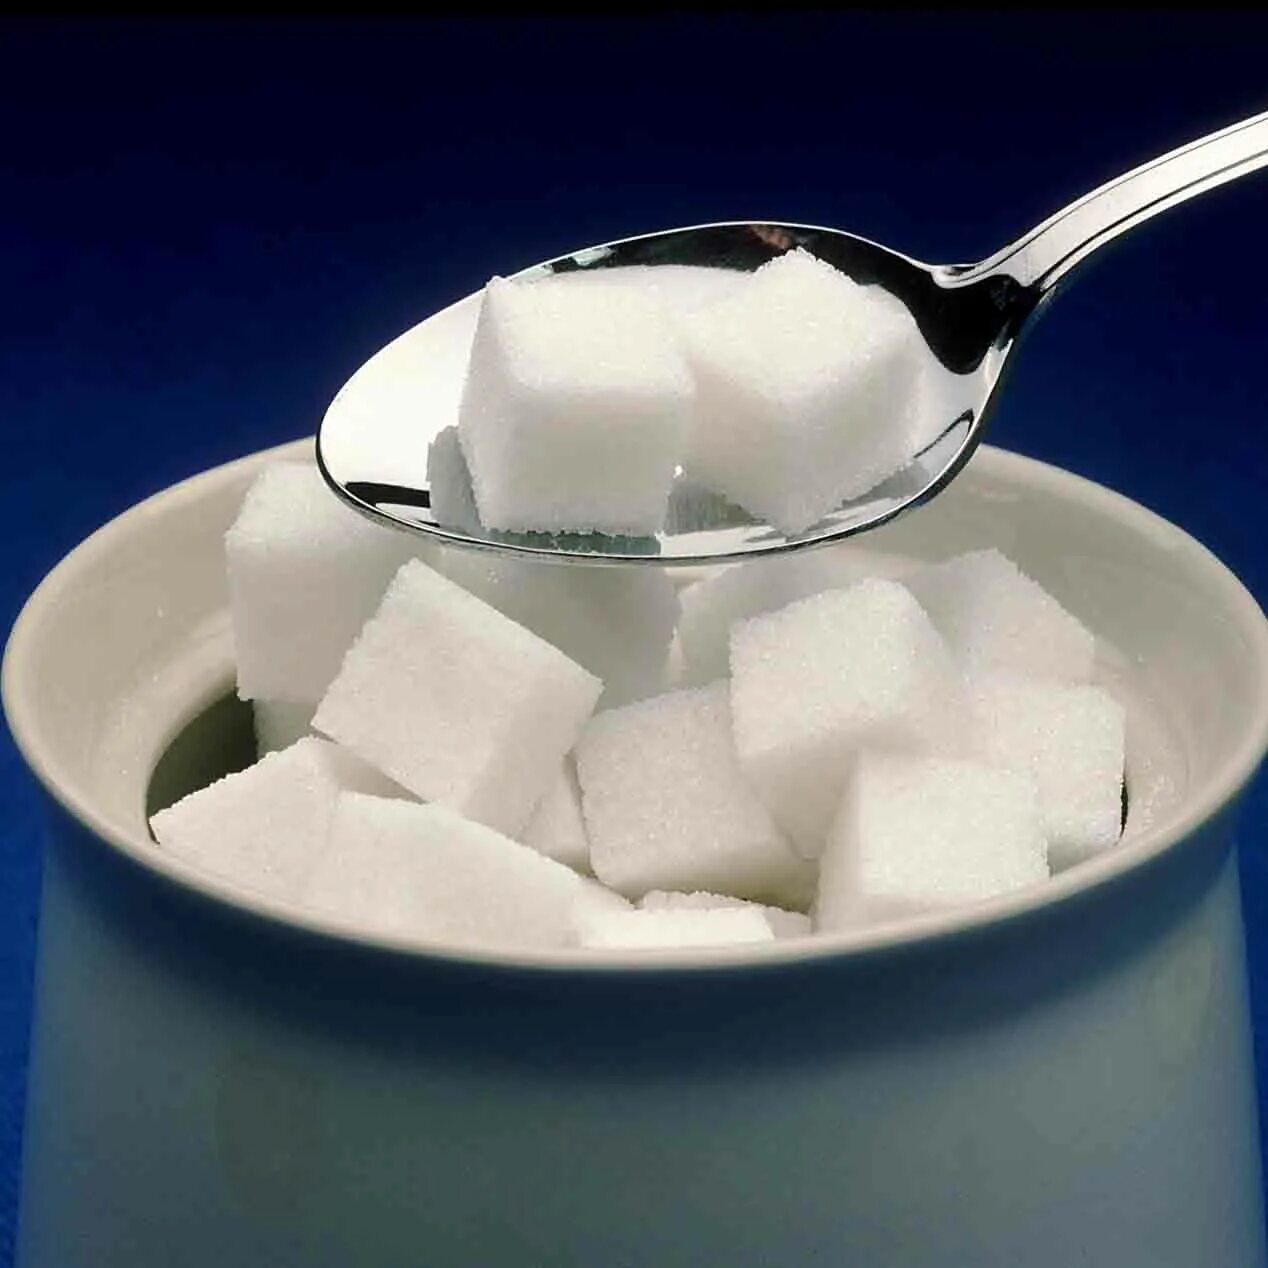 Берг сахара. Сахар. Сахар рафинад. Сахарница для кускового сахара. Рафинированный сахар.